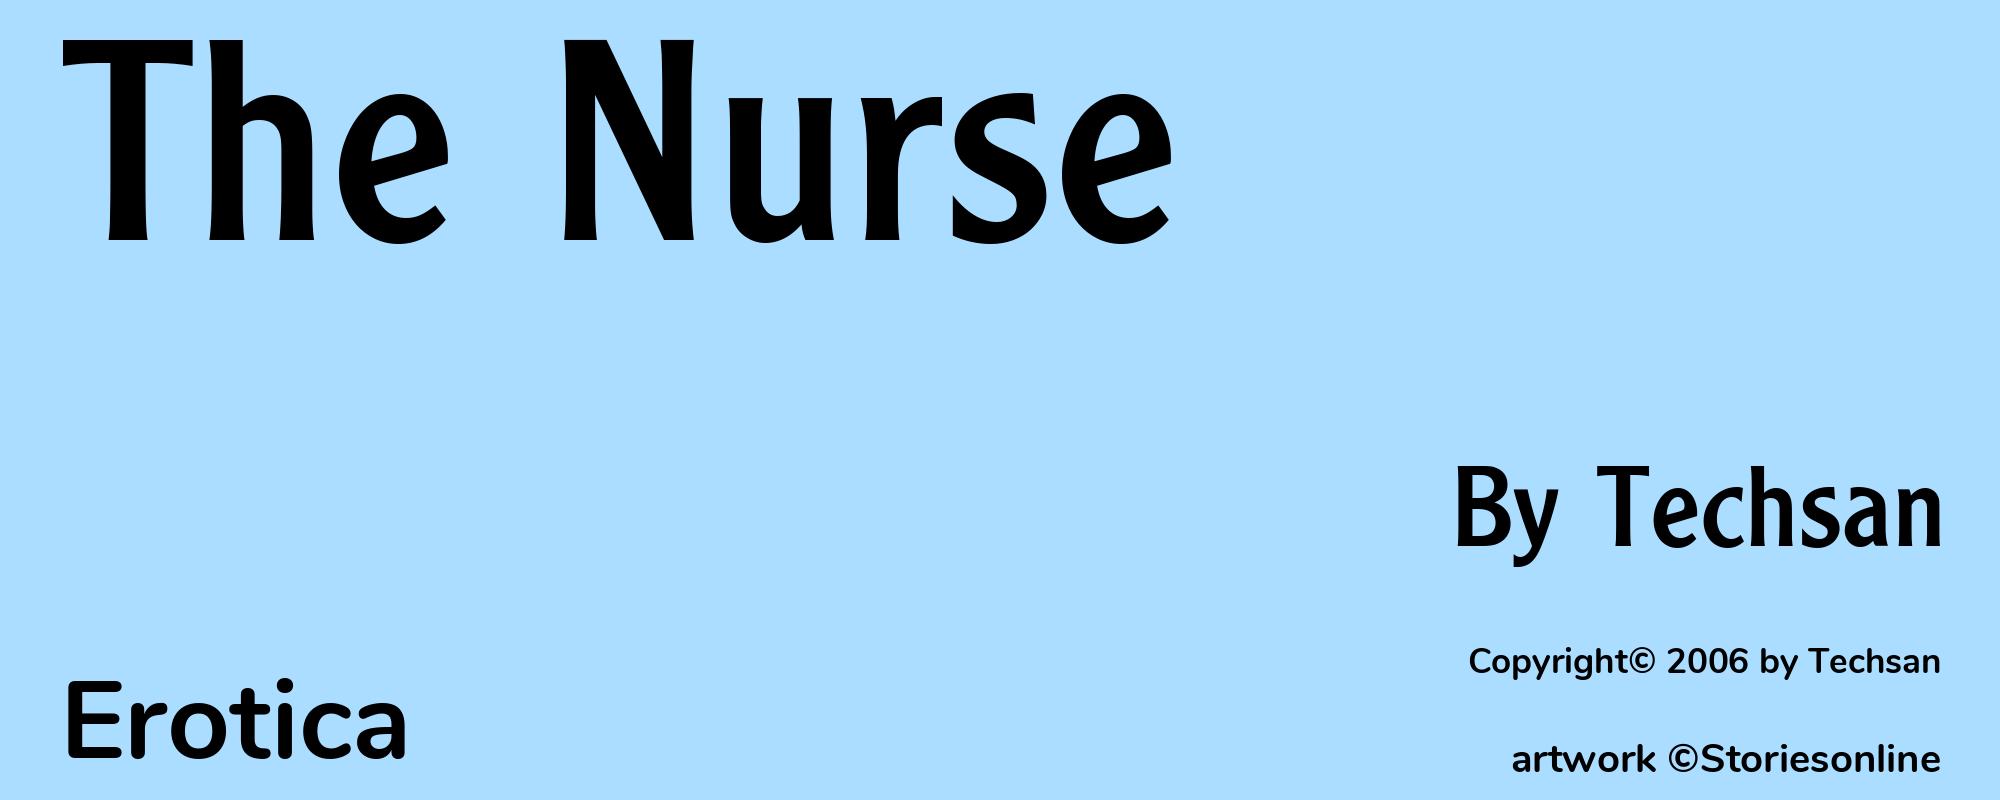 The Nurse - Cover